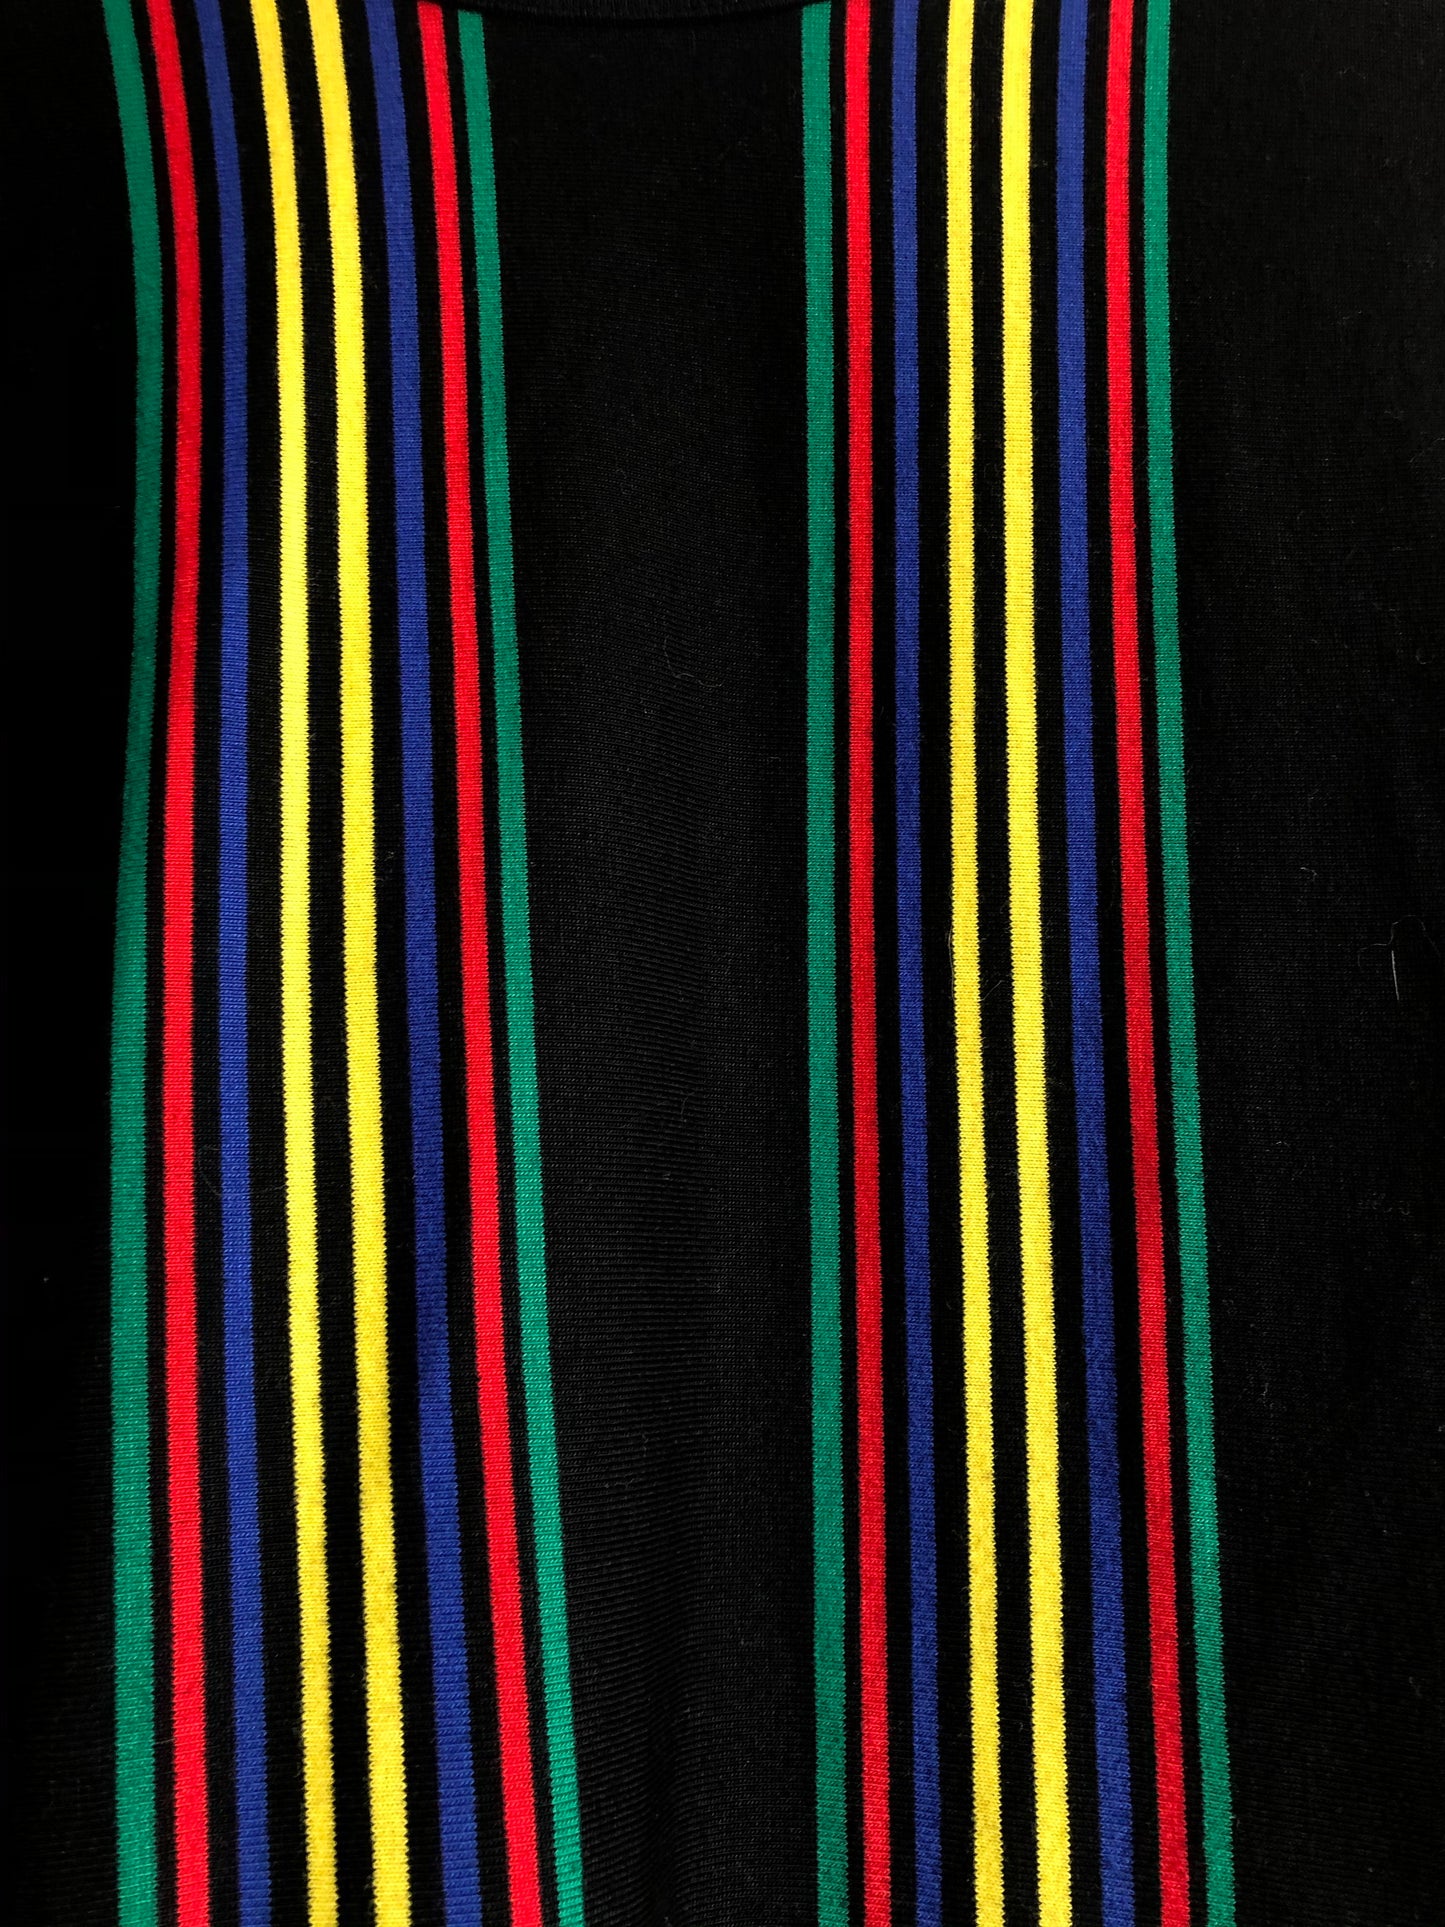 Playera Líneas Colores 90s